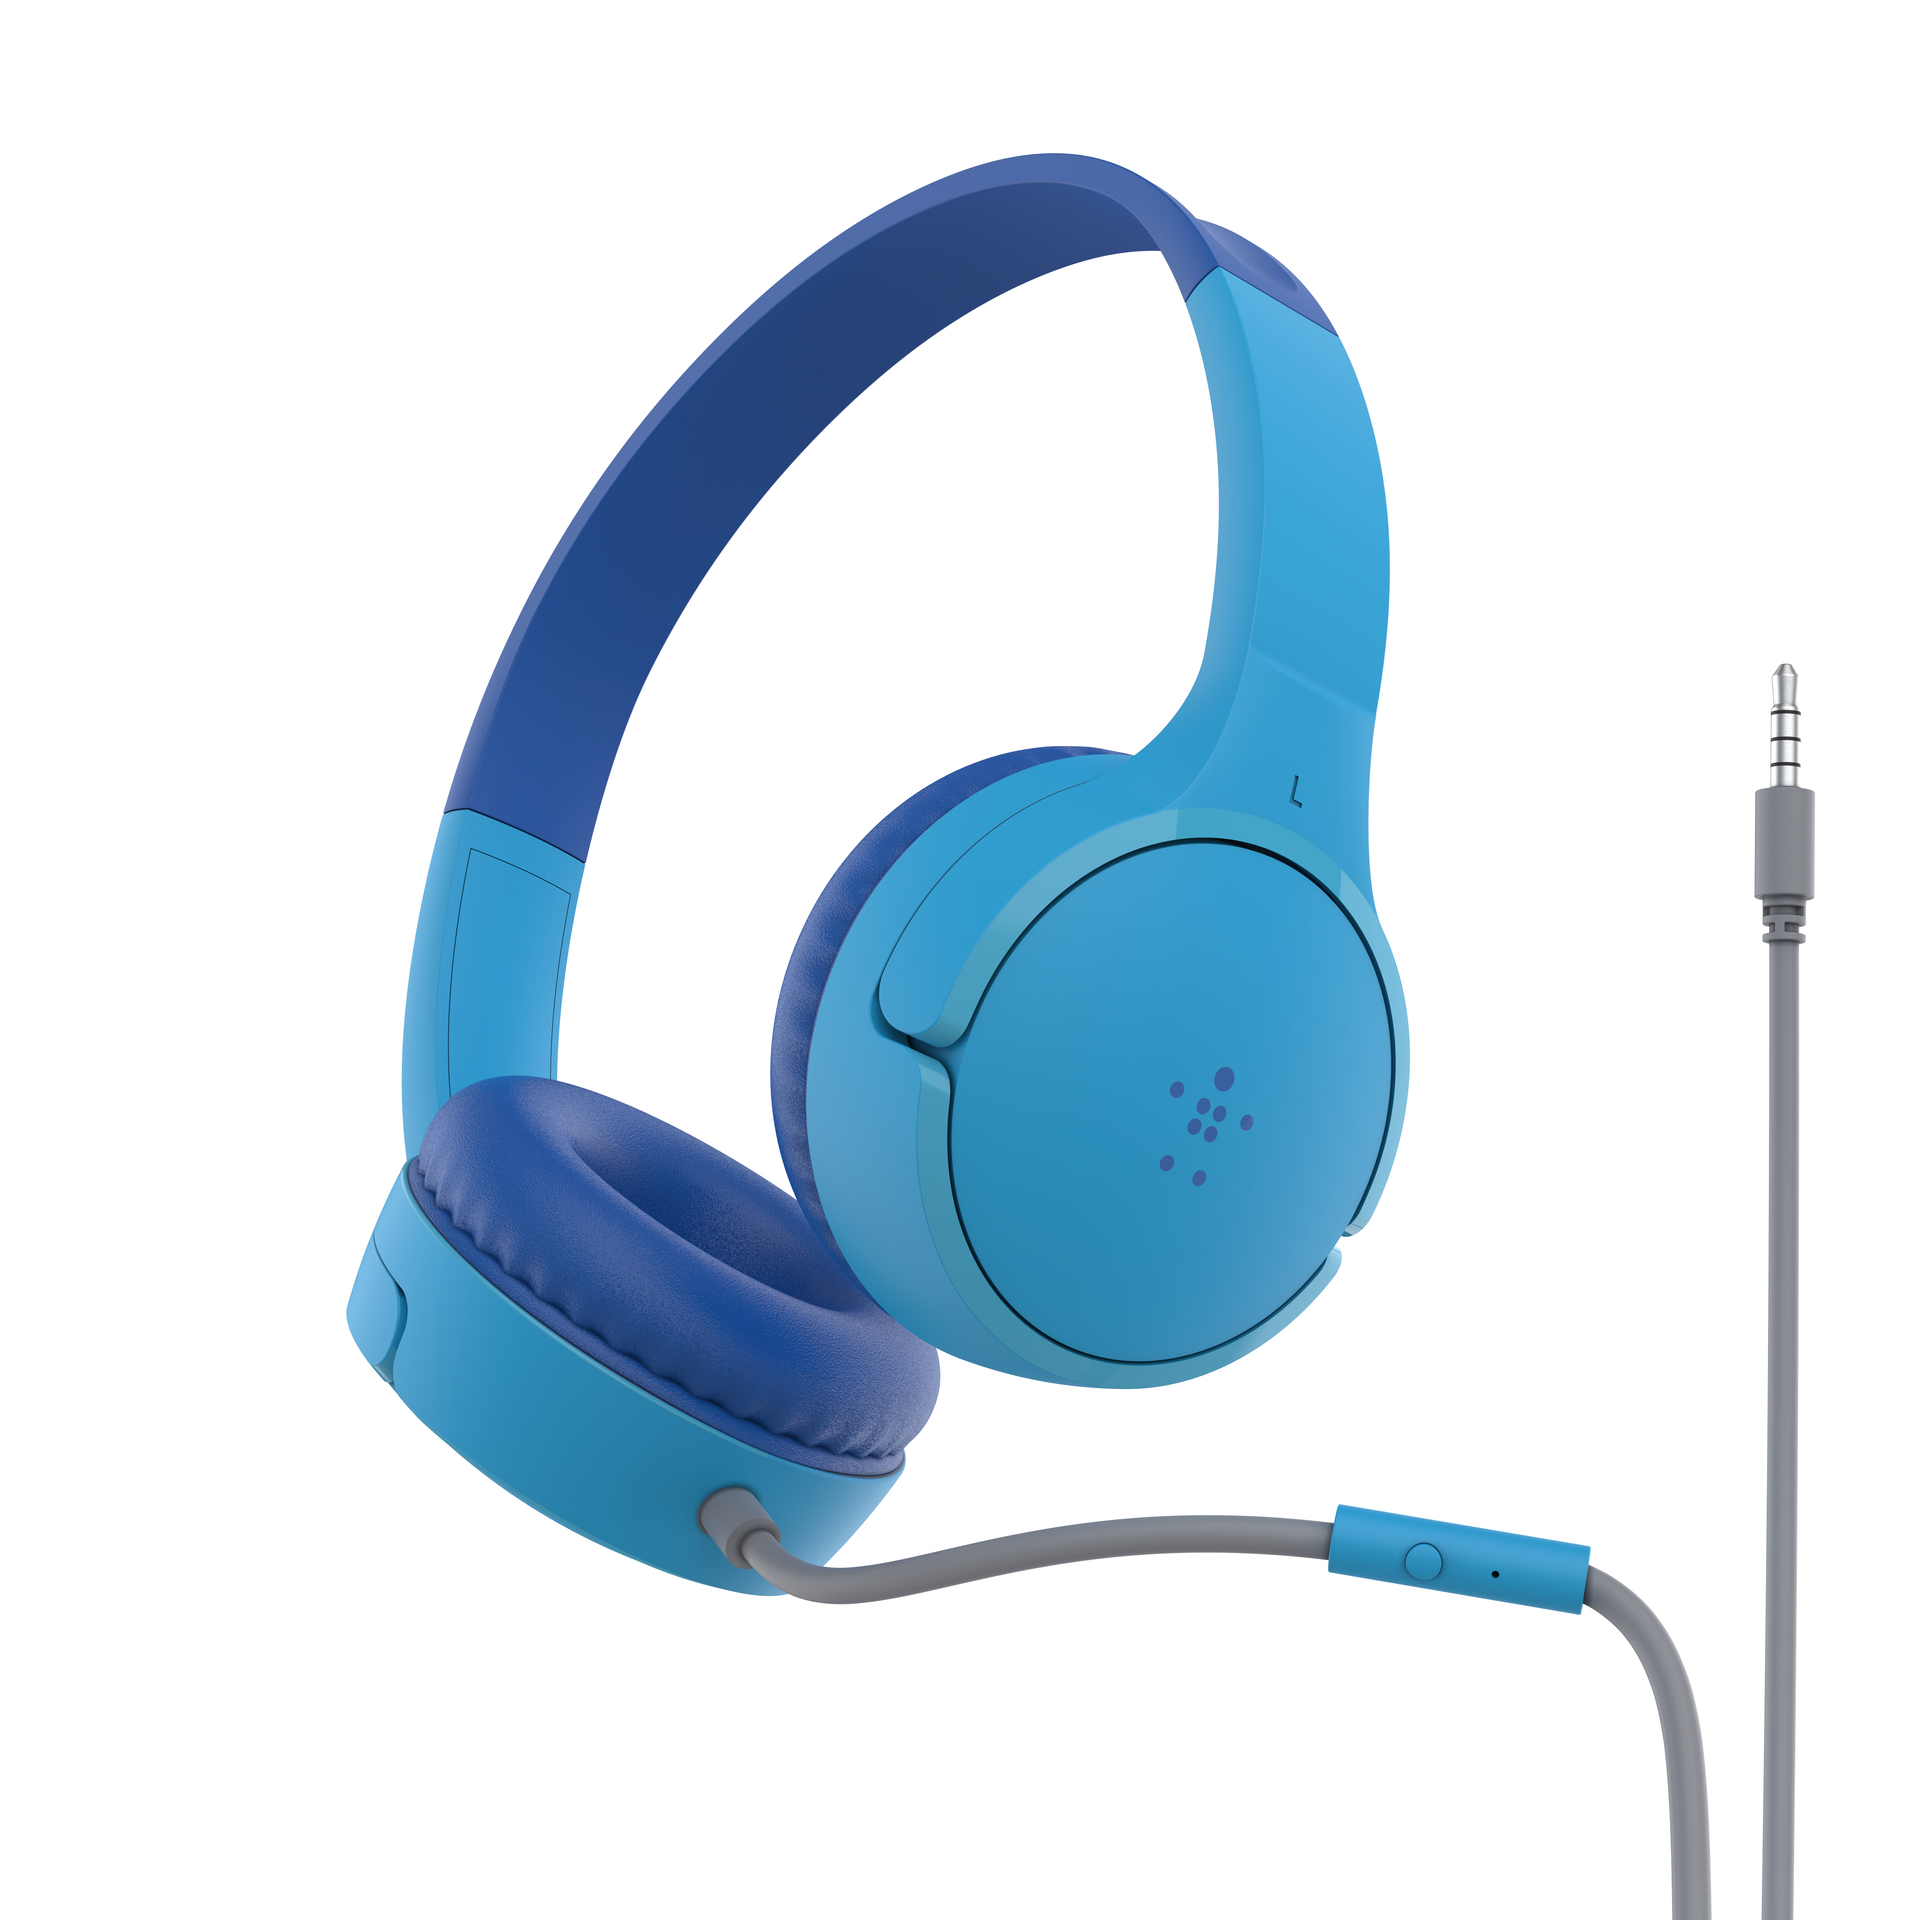 Belkin SOUNDFORM™ Mini kabelgebundene On-Ear Kopfhörer blau | aetka Shop